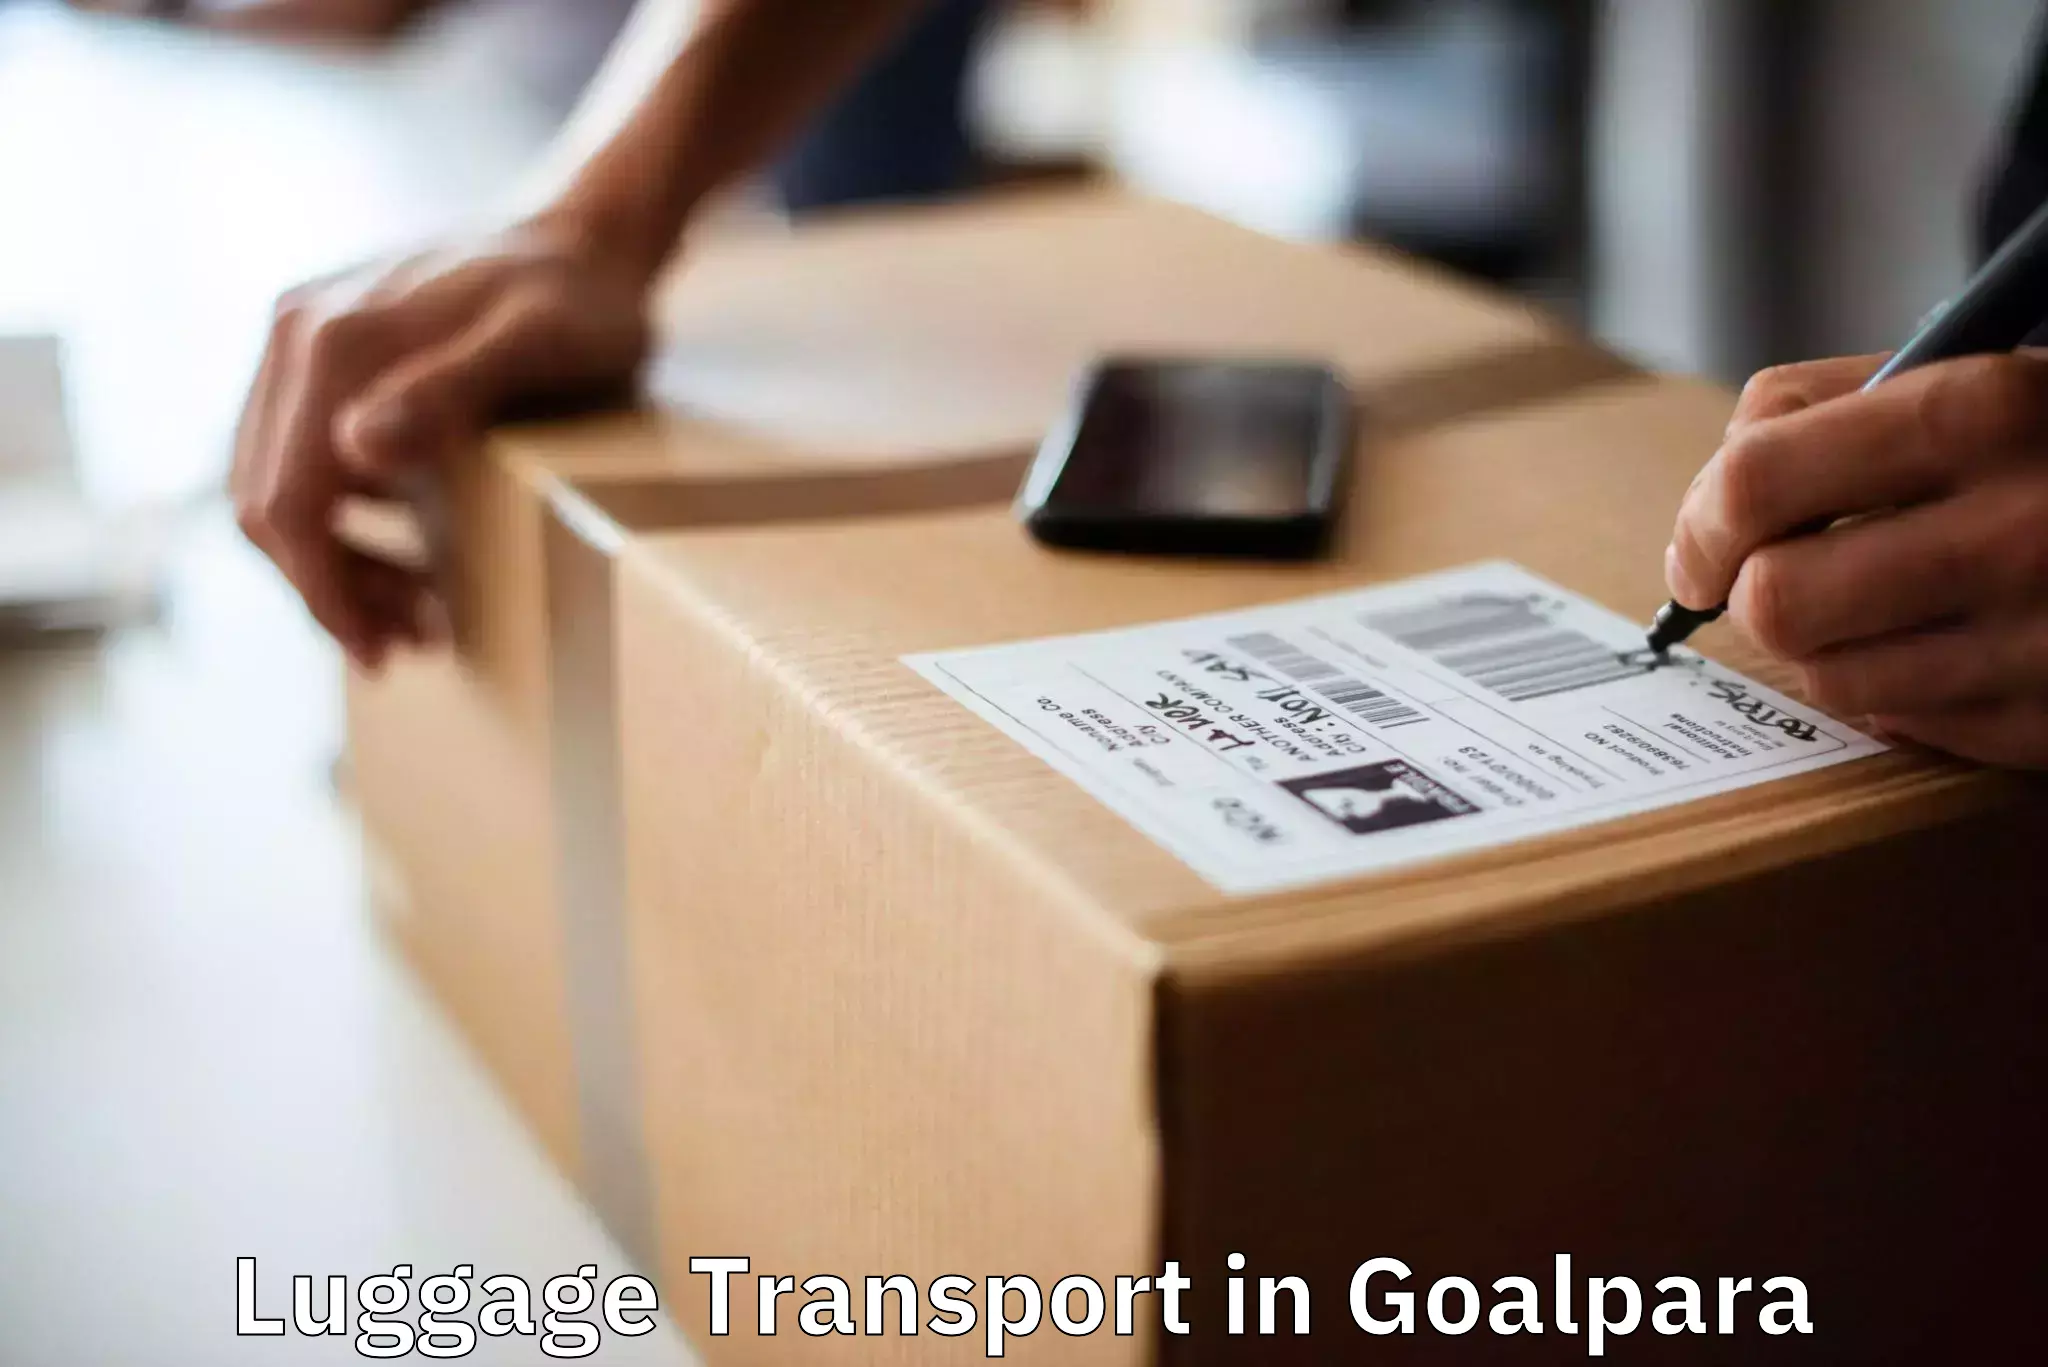 Luggage transport pricing in Goalpara